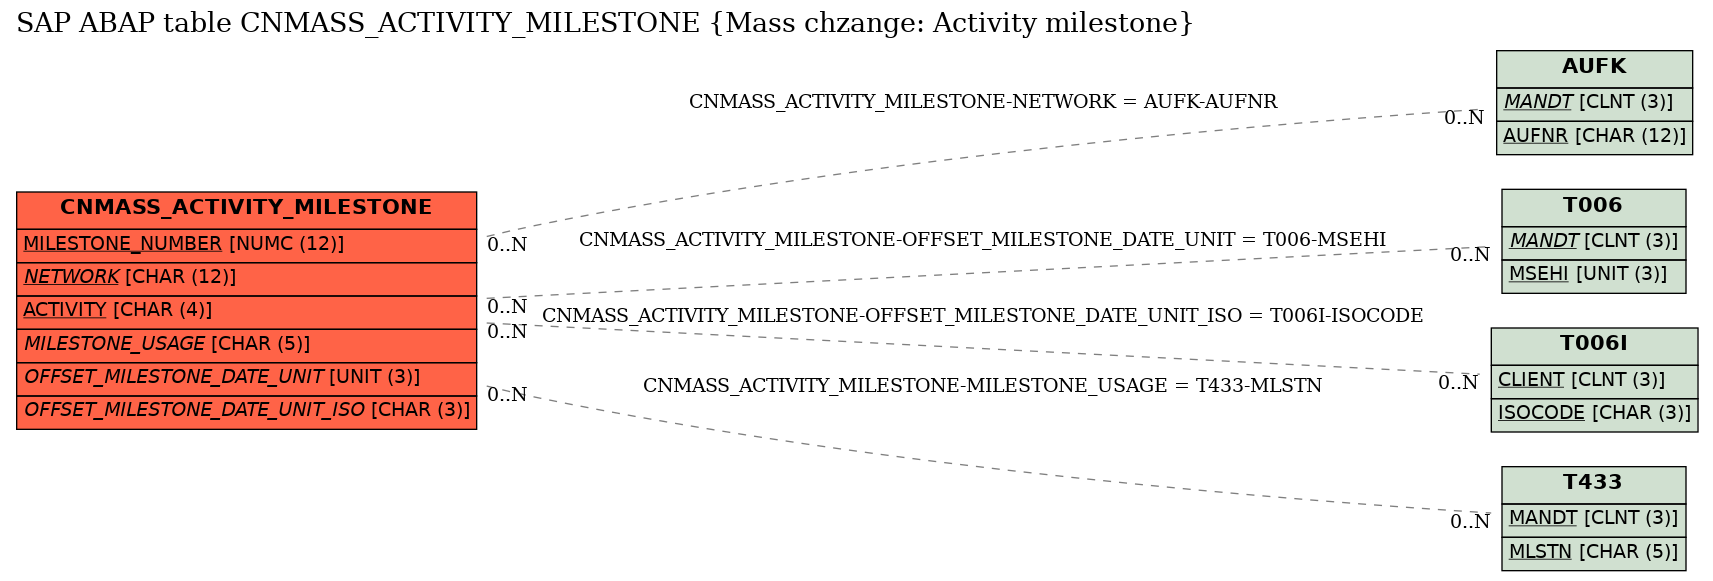 E-R Diagram for table CNMASS_ACTIVITY_MILESTONE (Mass chzange: Activity milestone)